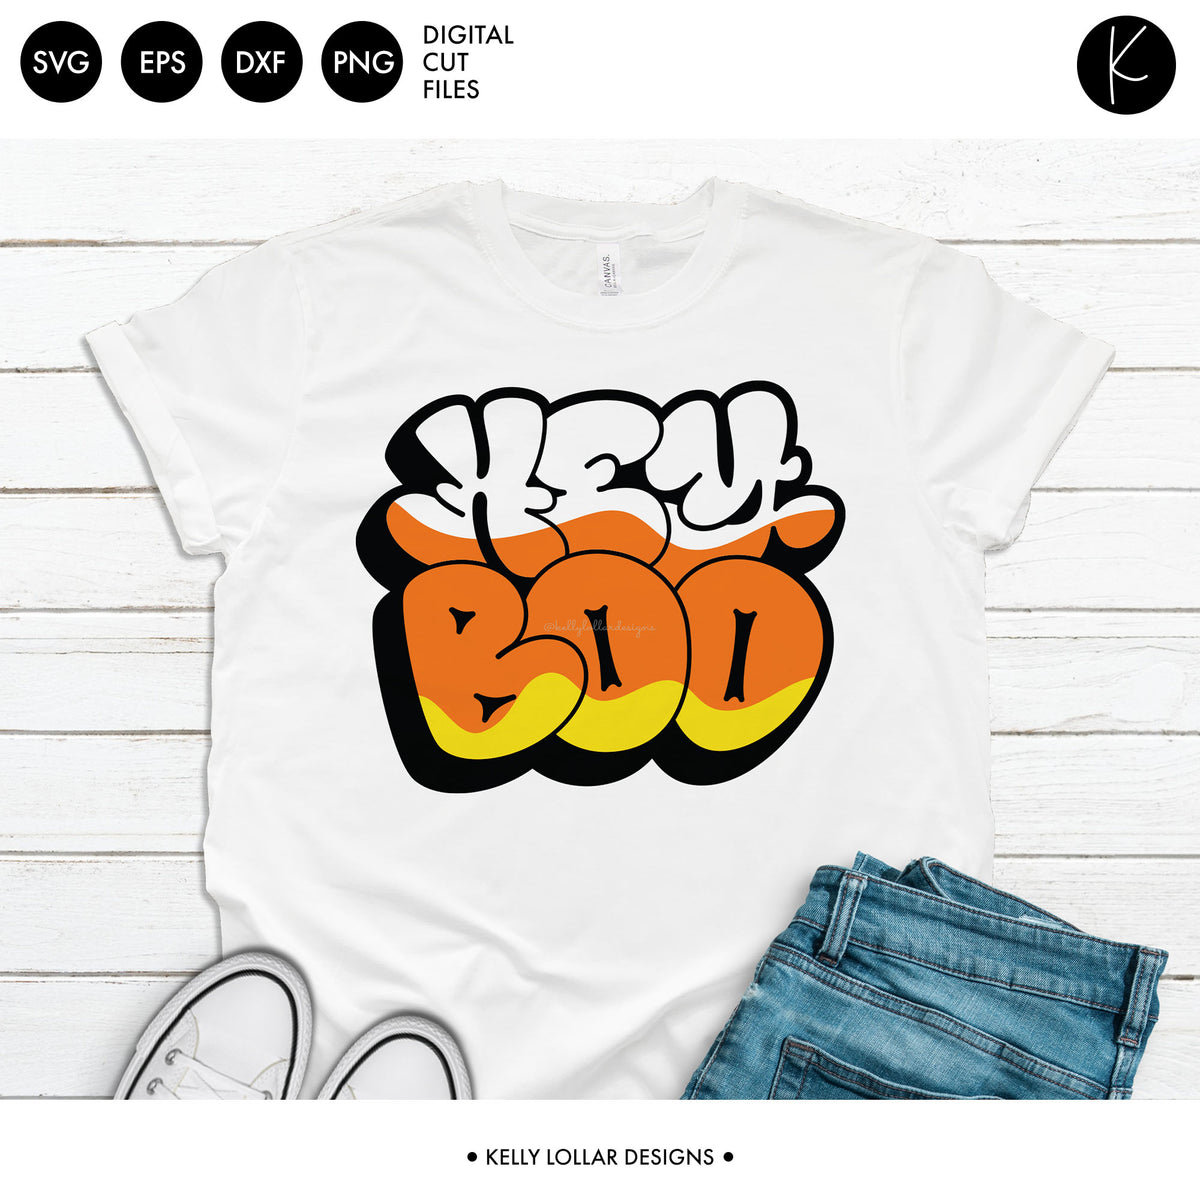 Hey Boo Graffiti | SVG DXF EPS PNG Cut Files